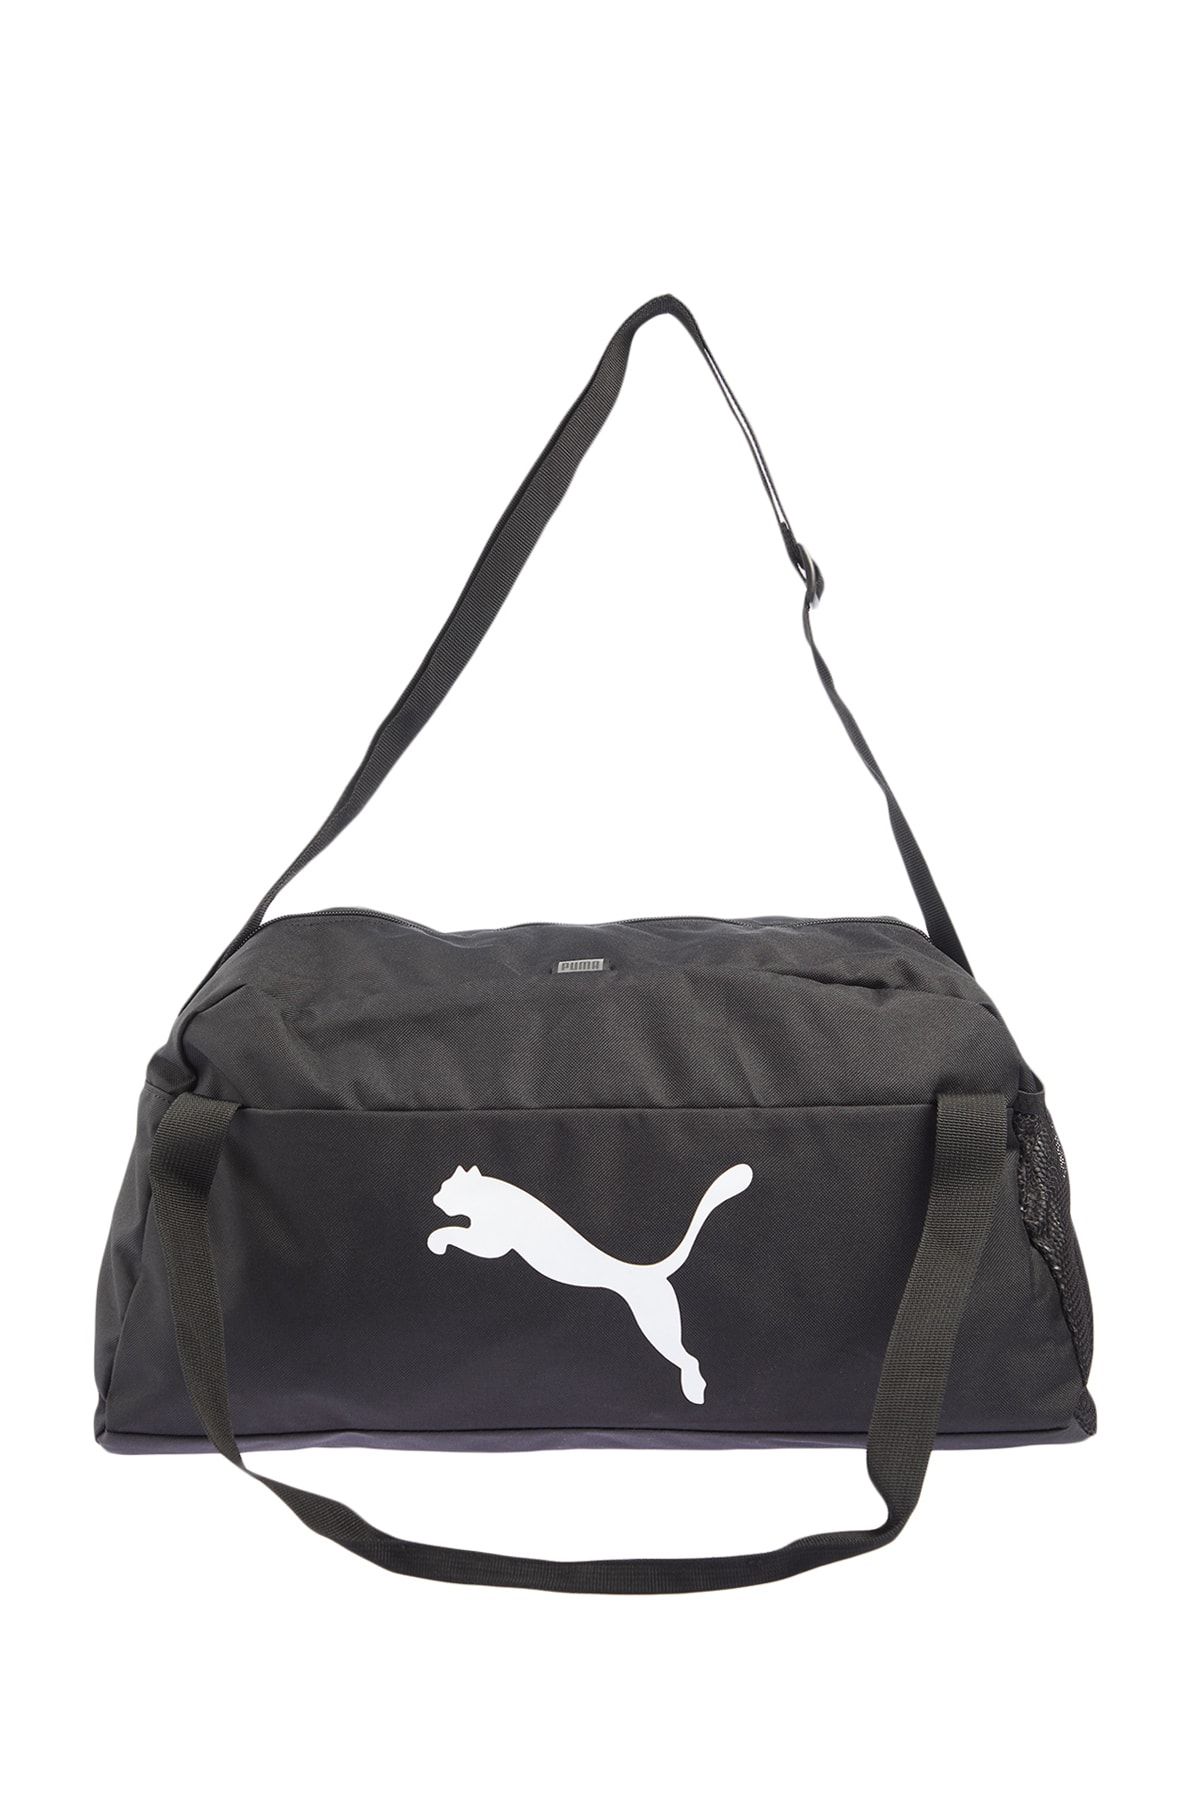 Puma Unisex Spor Çantası - PUMA Catch Sportsbag Puma Black - 07943001